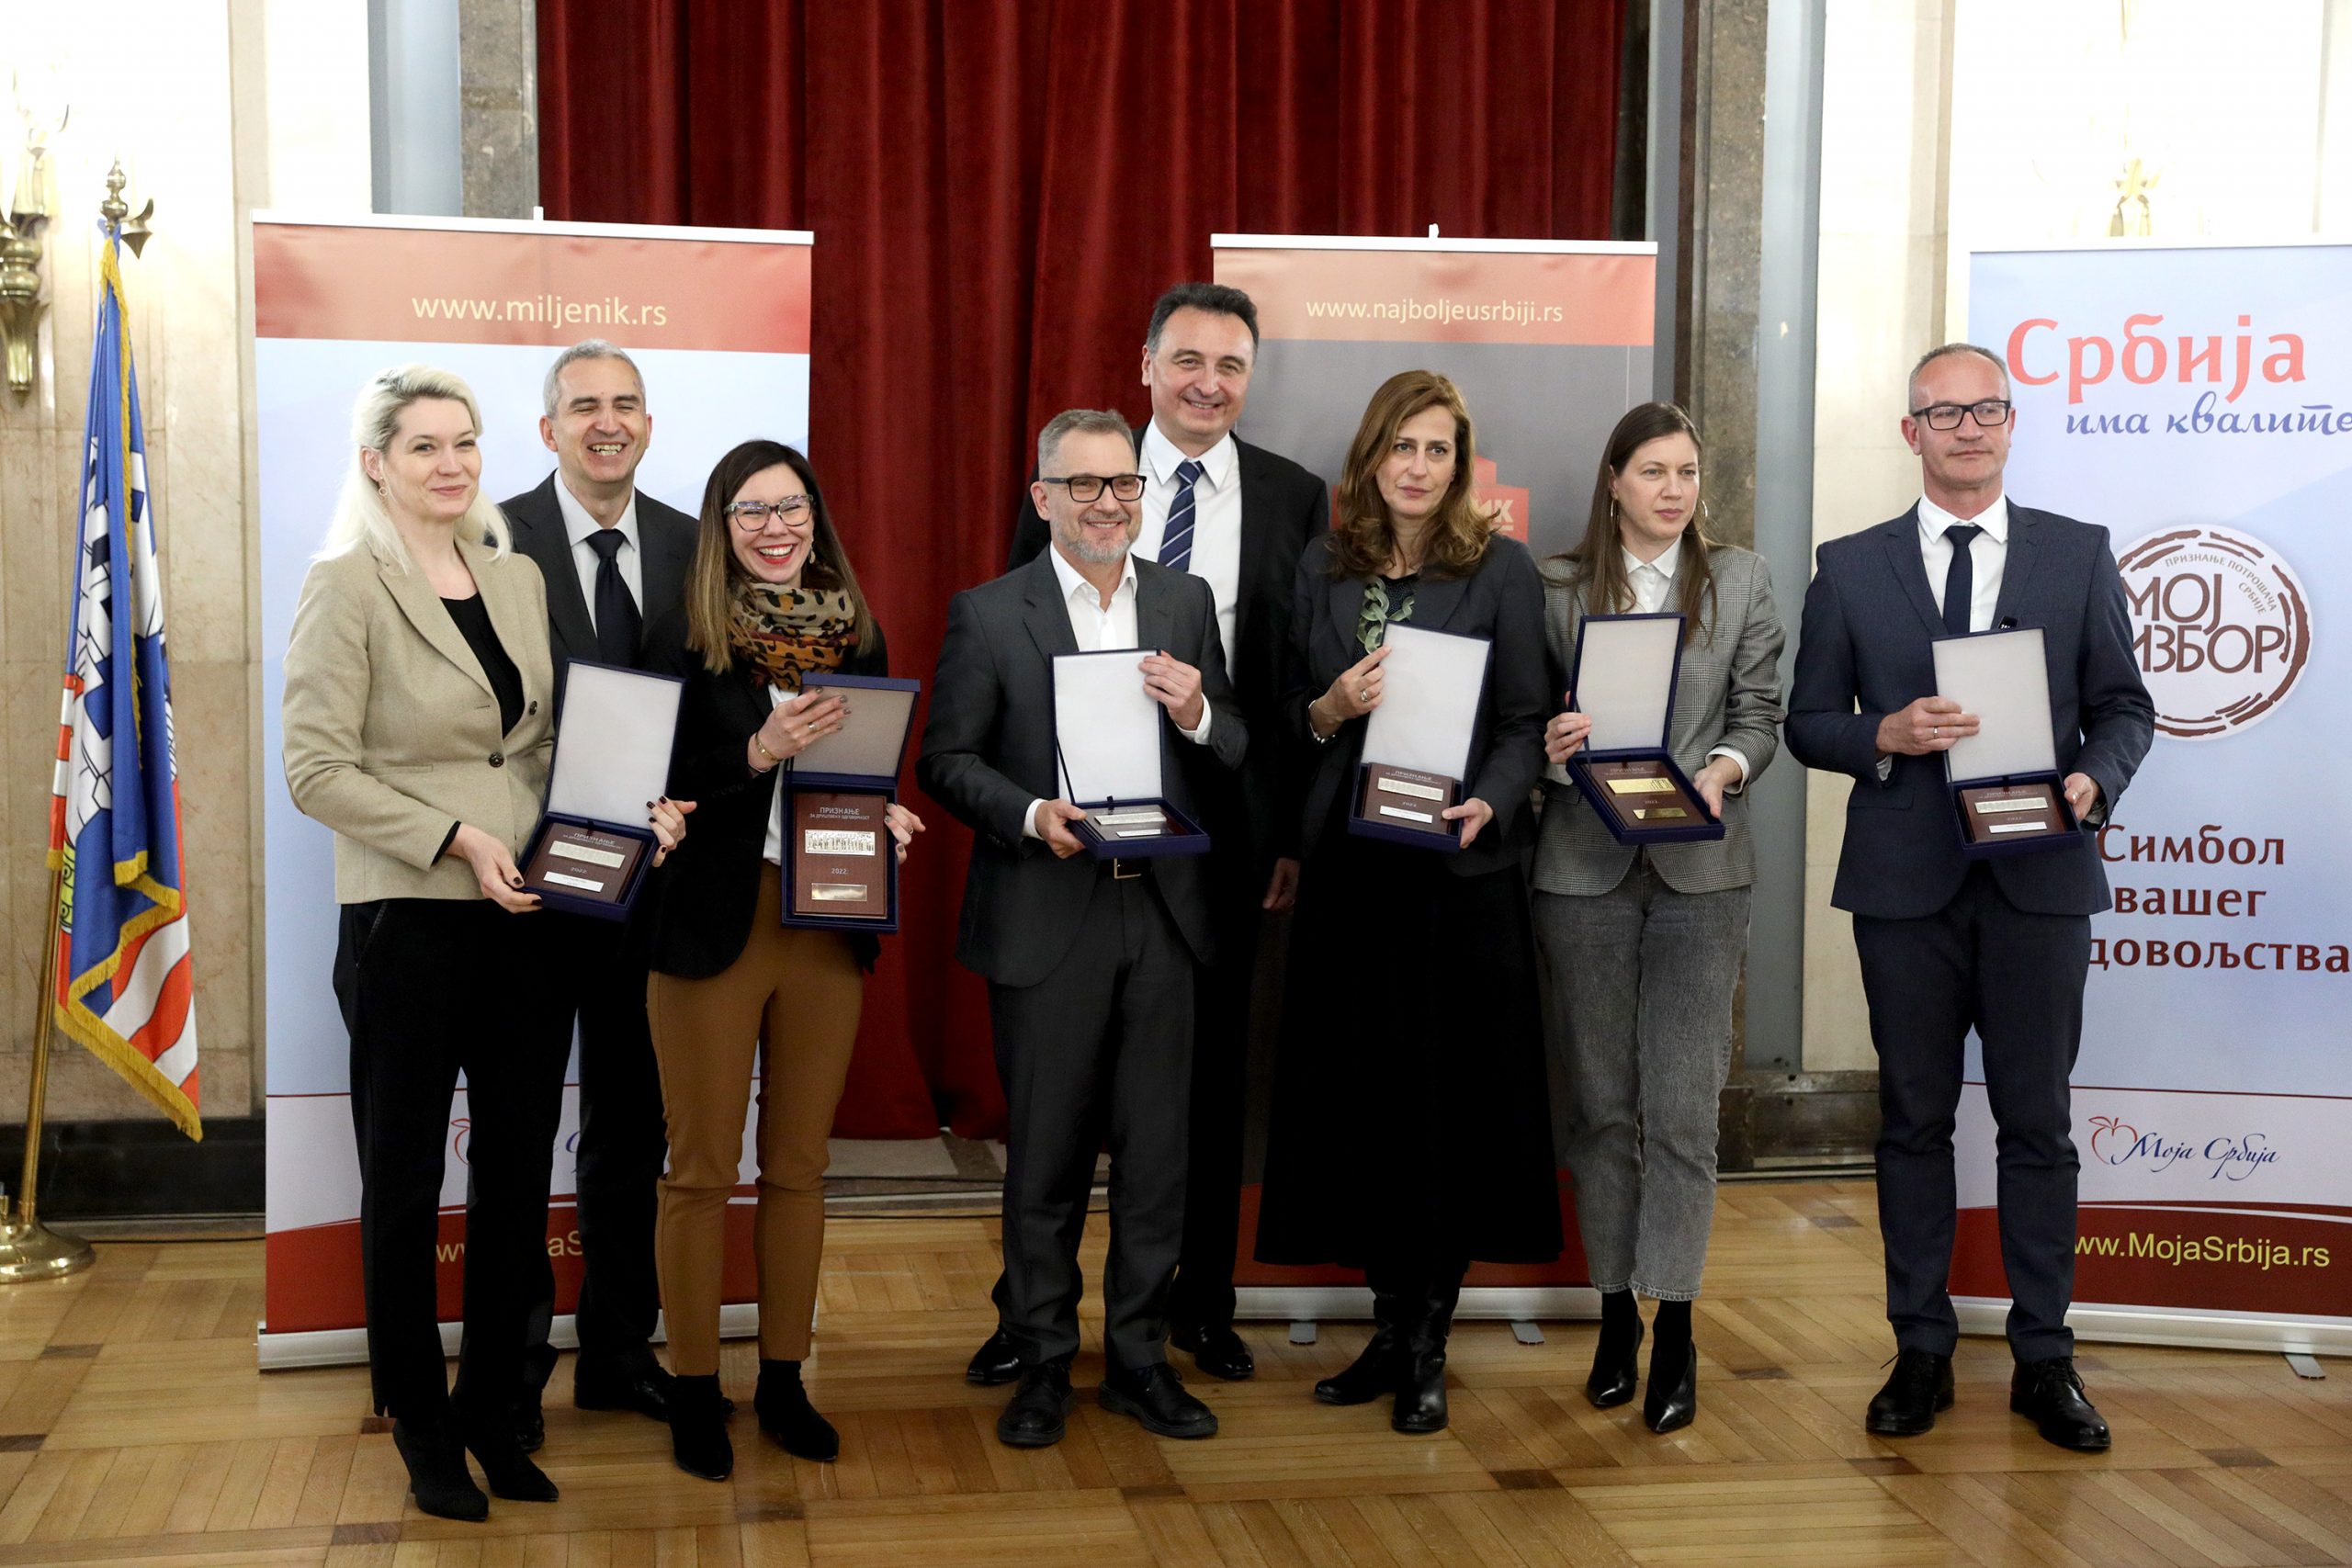 Dobitnici nagrada na svečanoj dodeli u Skupštini Grada Beograda, 7. aprila 2022.